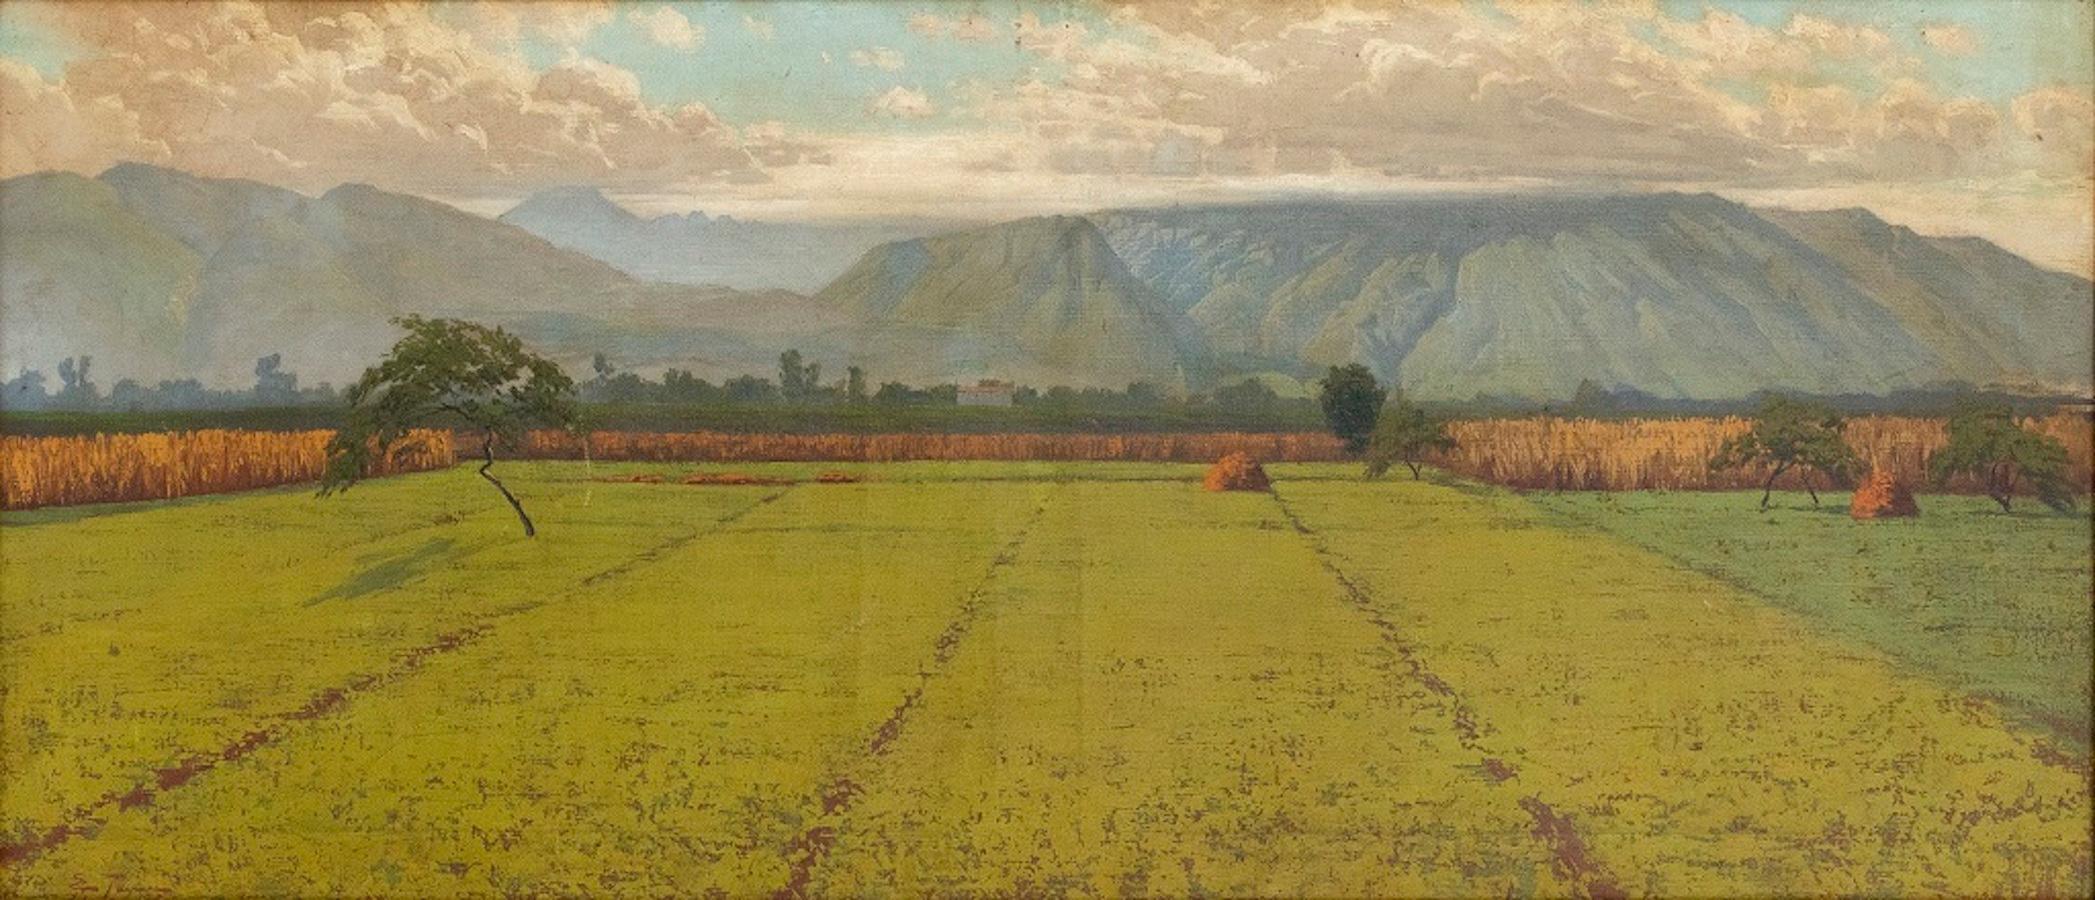 Highlands of Arcinazzo - Huile sur toile d'E. Tani - années 1920